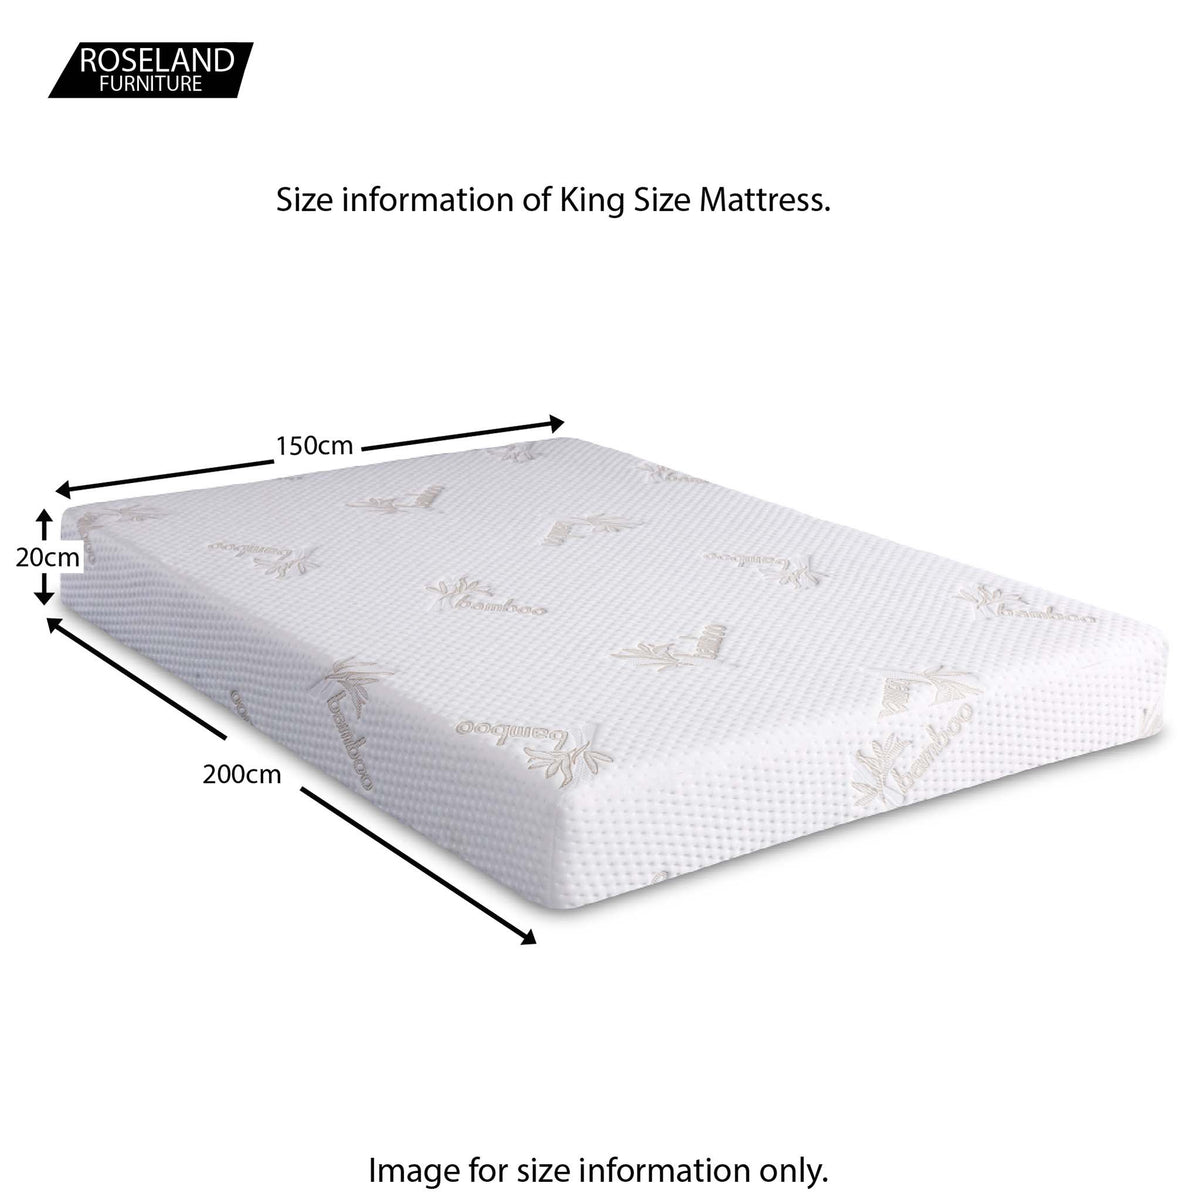 MemoryPedic Pocket Spring Reflex Foam 1000 Mattress - adults 5ft king size size guide